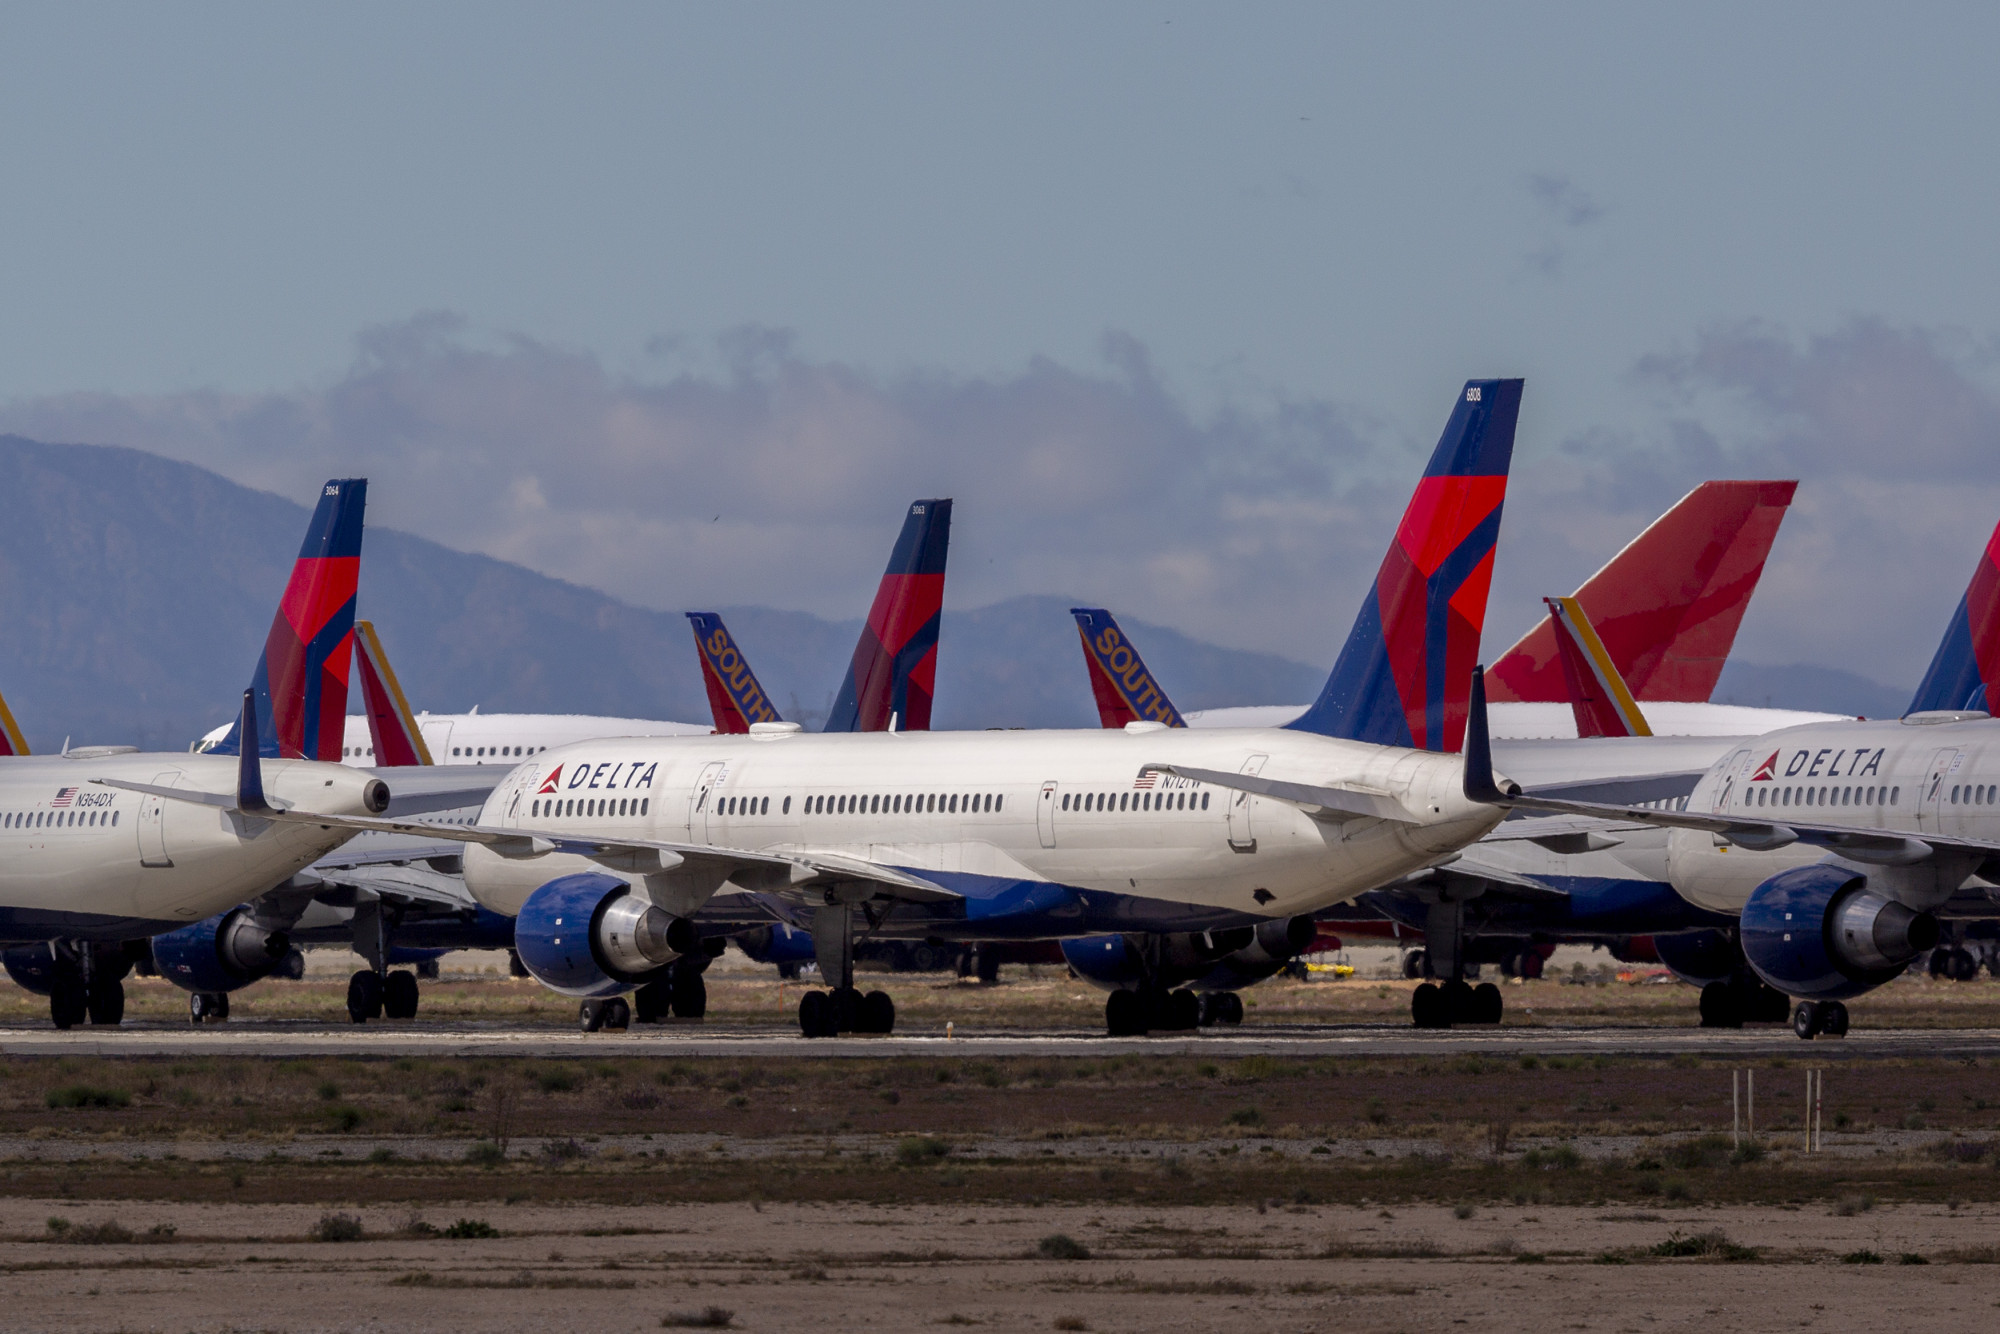 Delta Wants at Least 3,000 Flight Attendants to Take Unpaid Leave